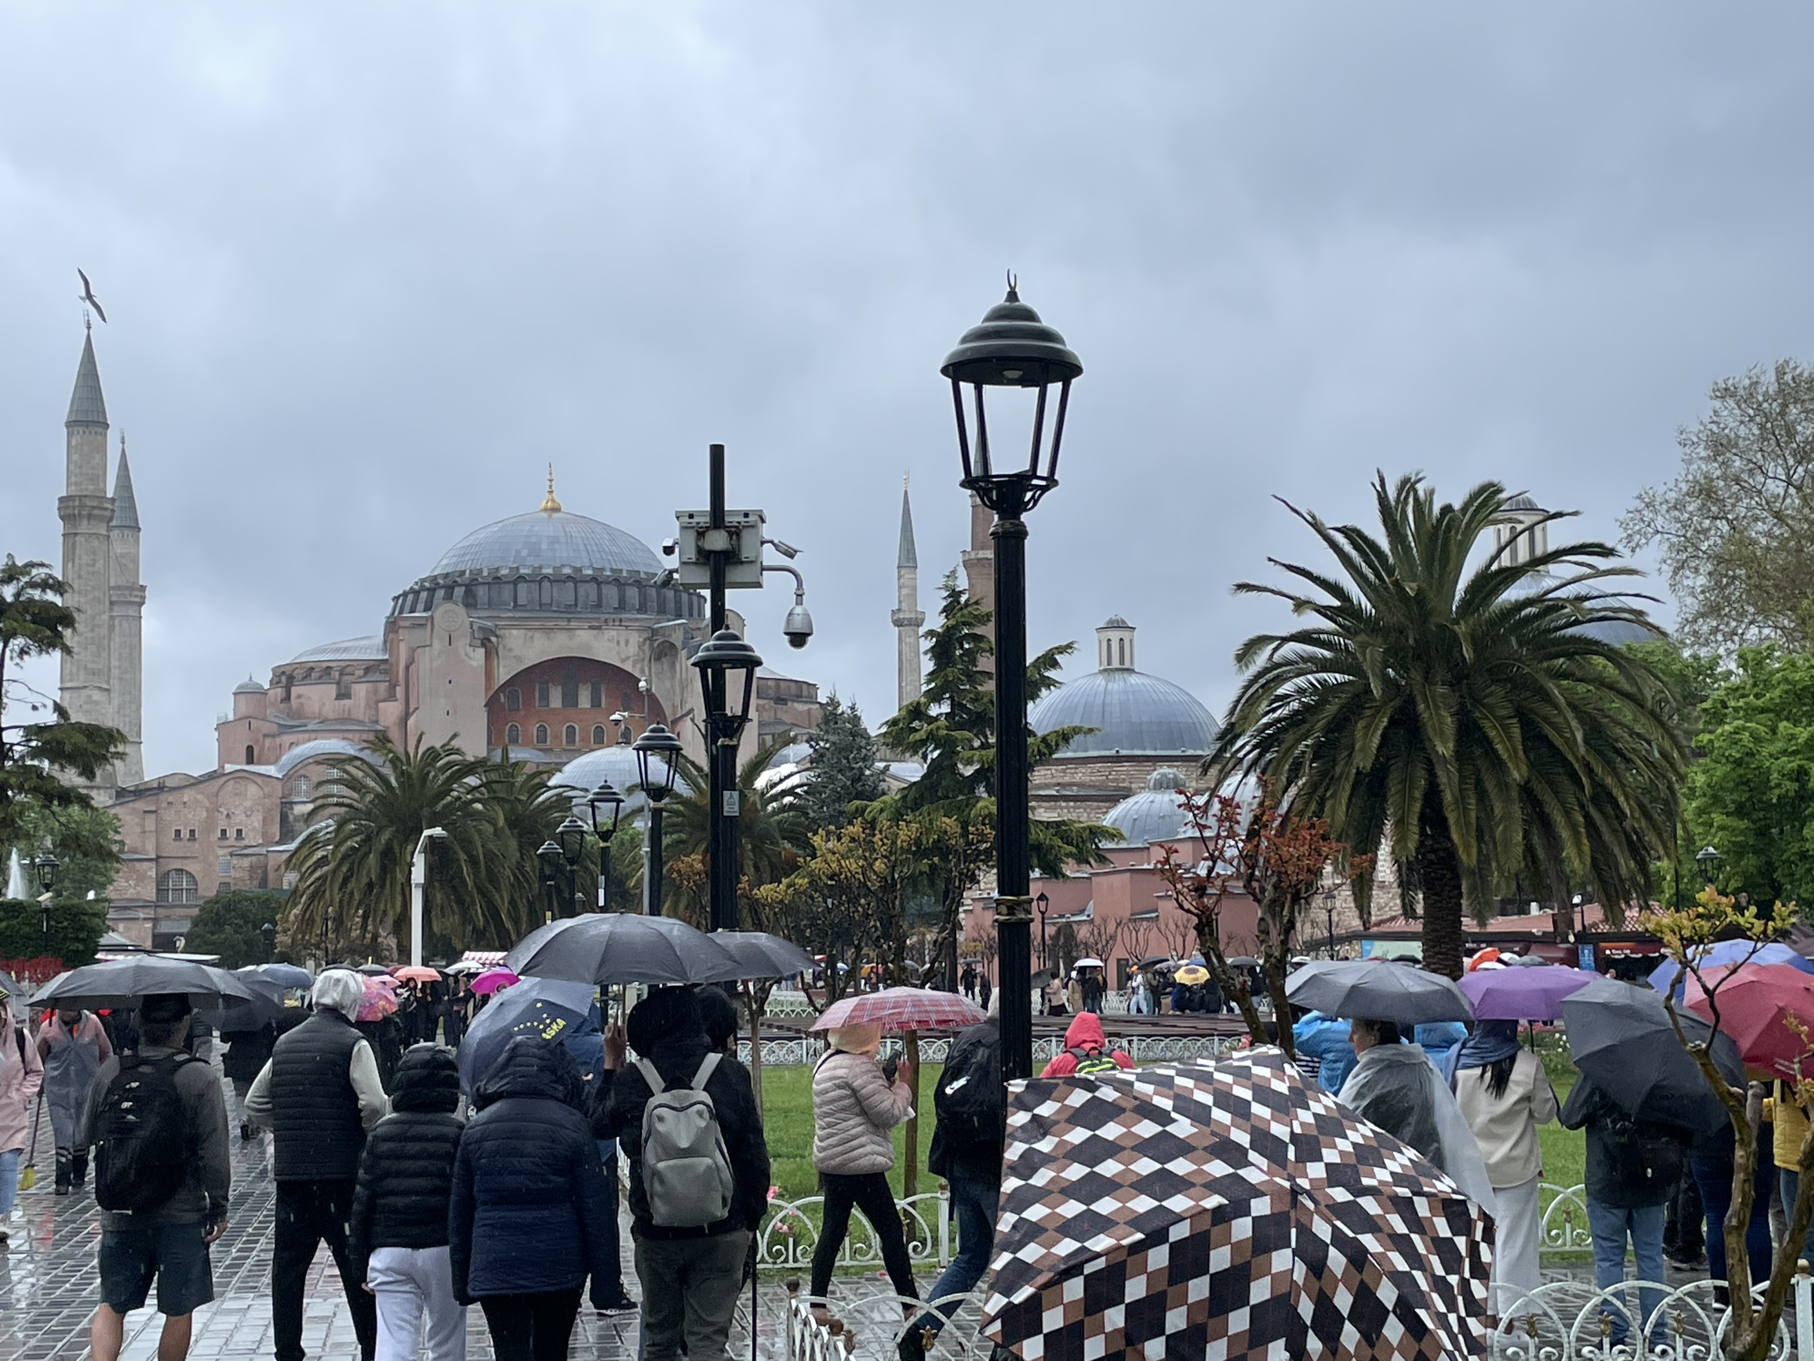 People undeer umbrellas walking towards the Hagia Sophia mosque